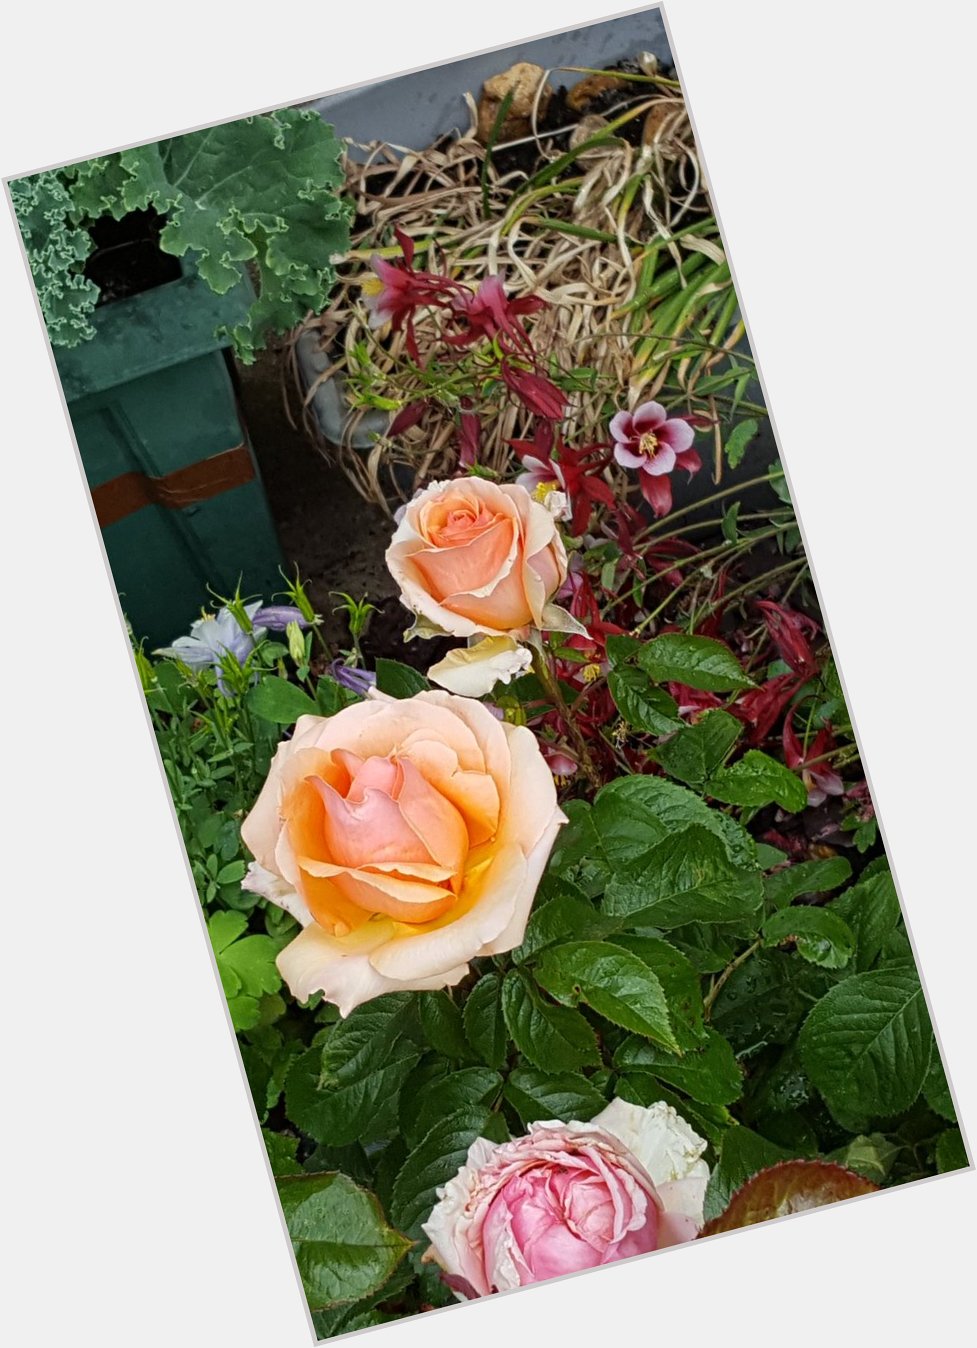  happy birthday Lynda Bellingham your rose is beautiful 